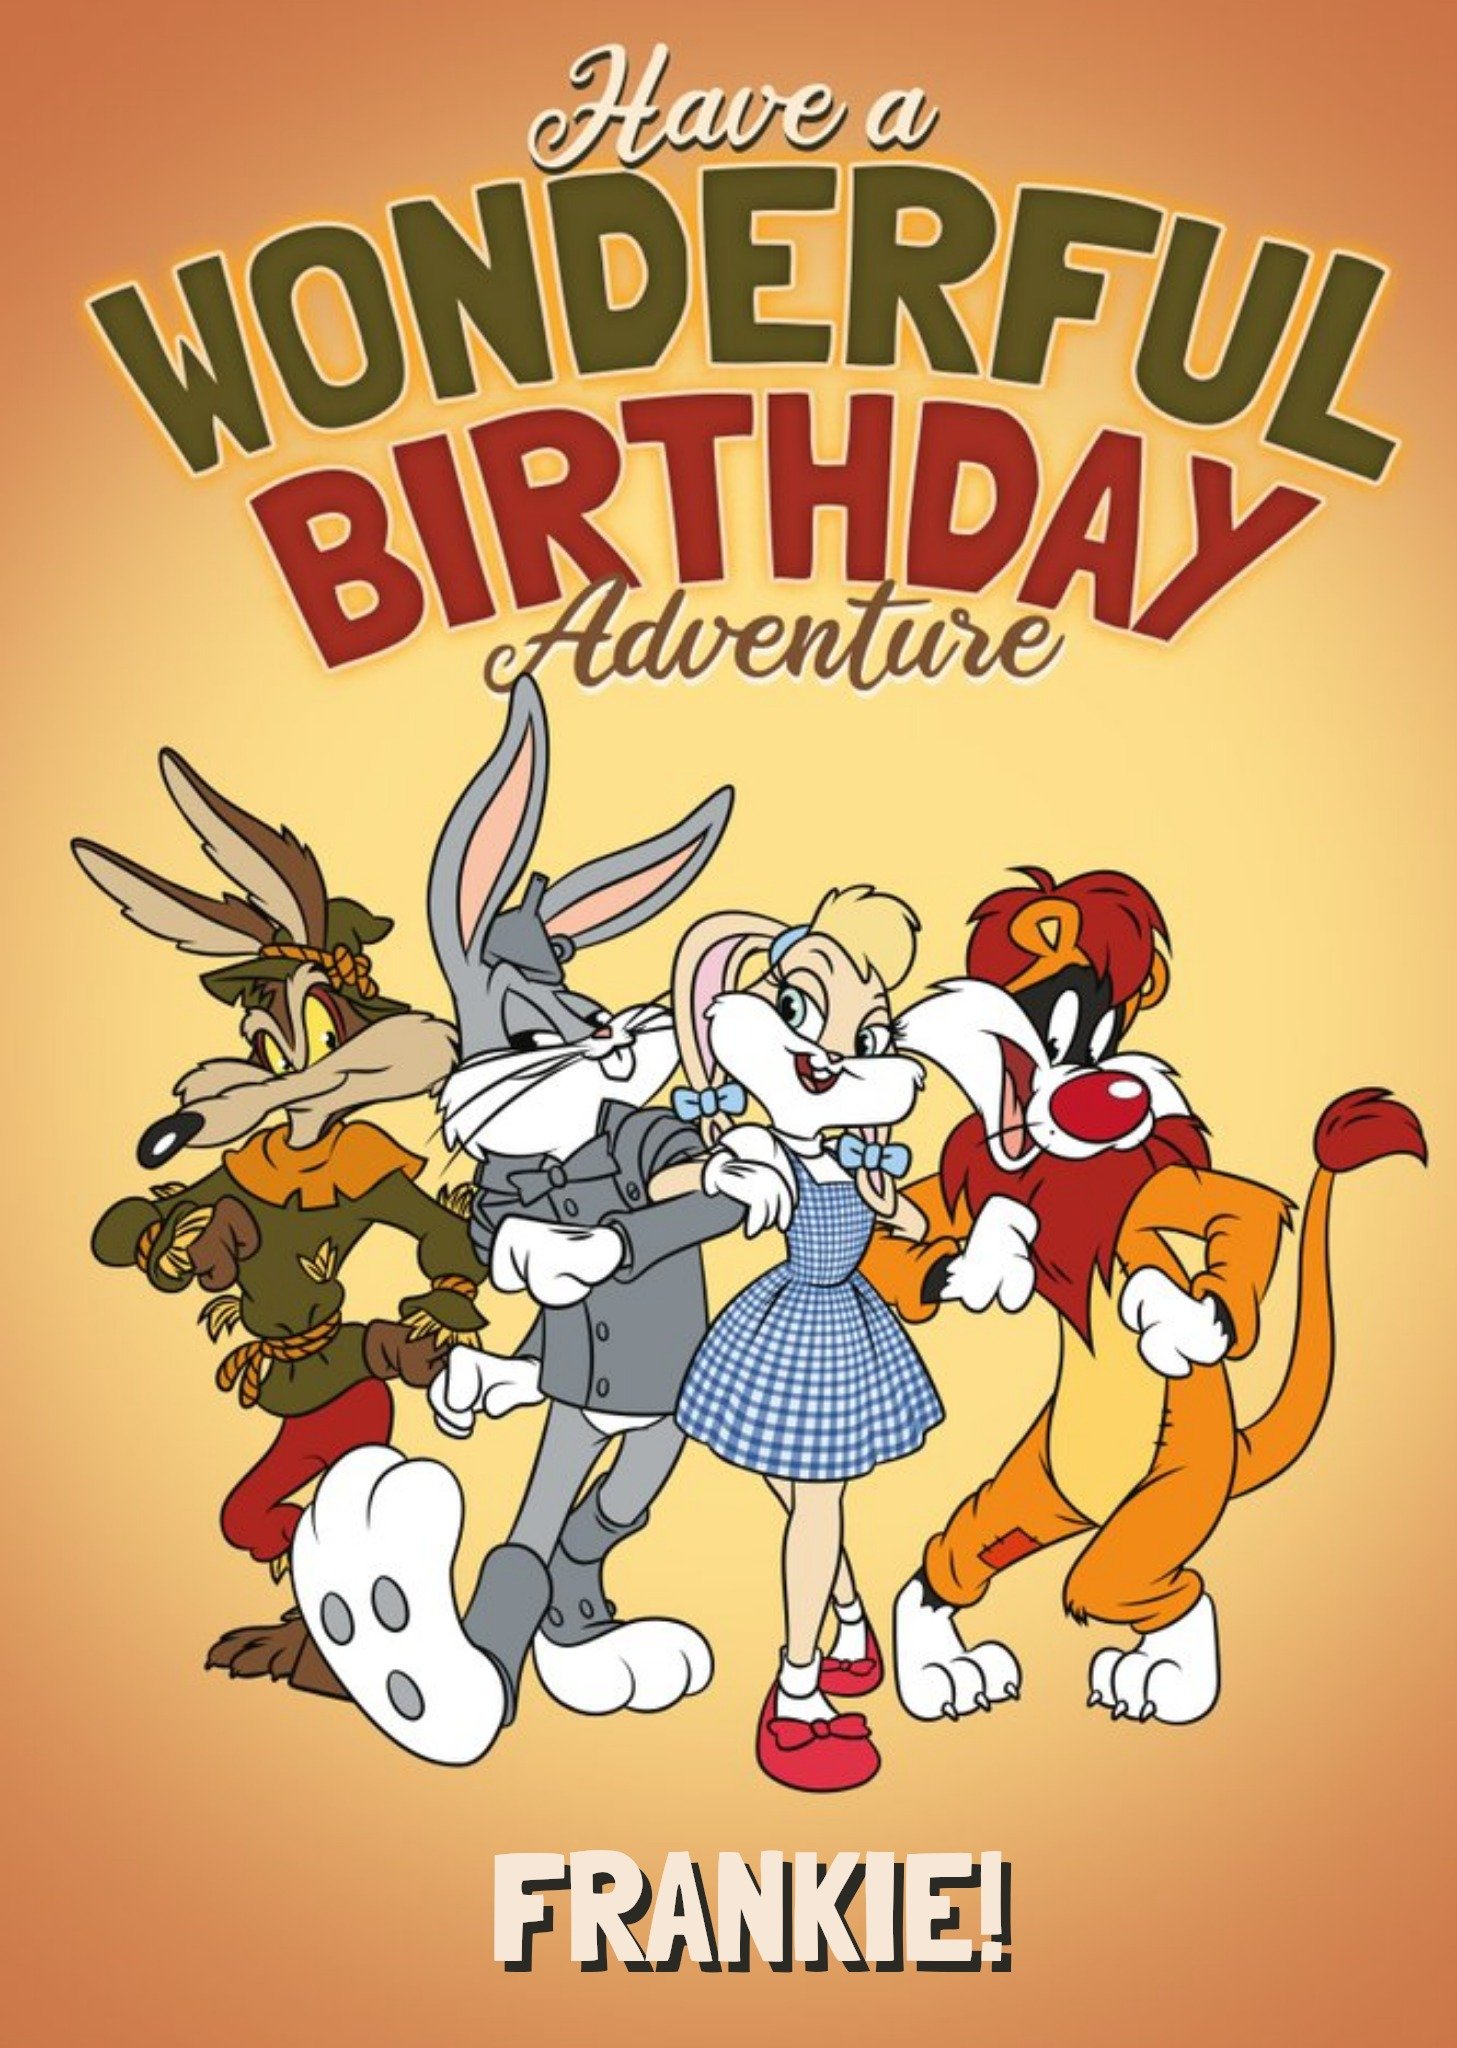 Moonpig Warner Brothers 100 Have Wonderful Birthday Adventure Card Ecard